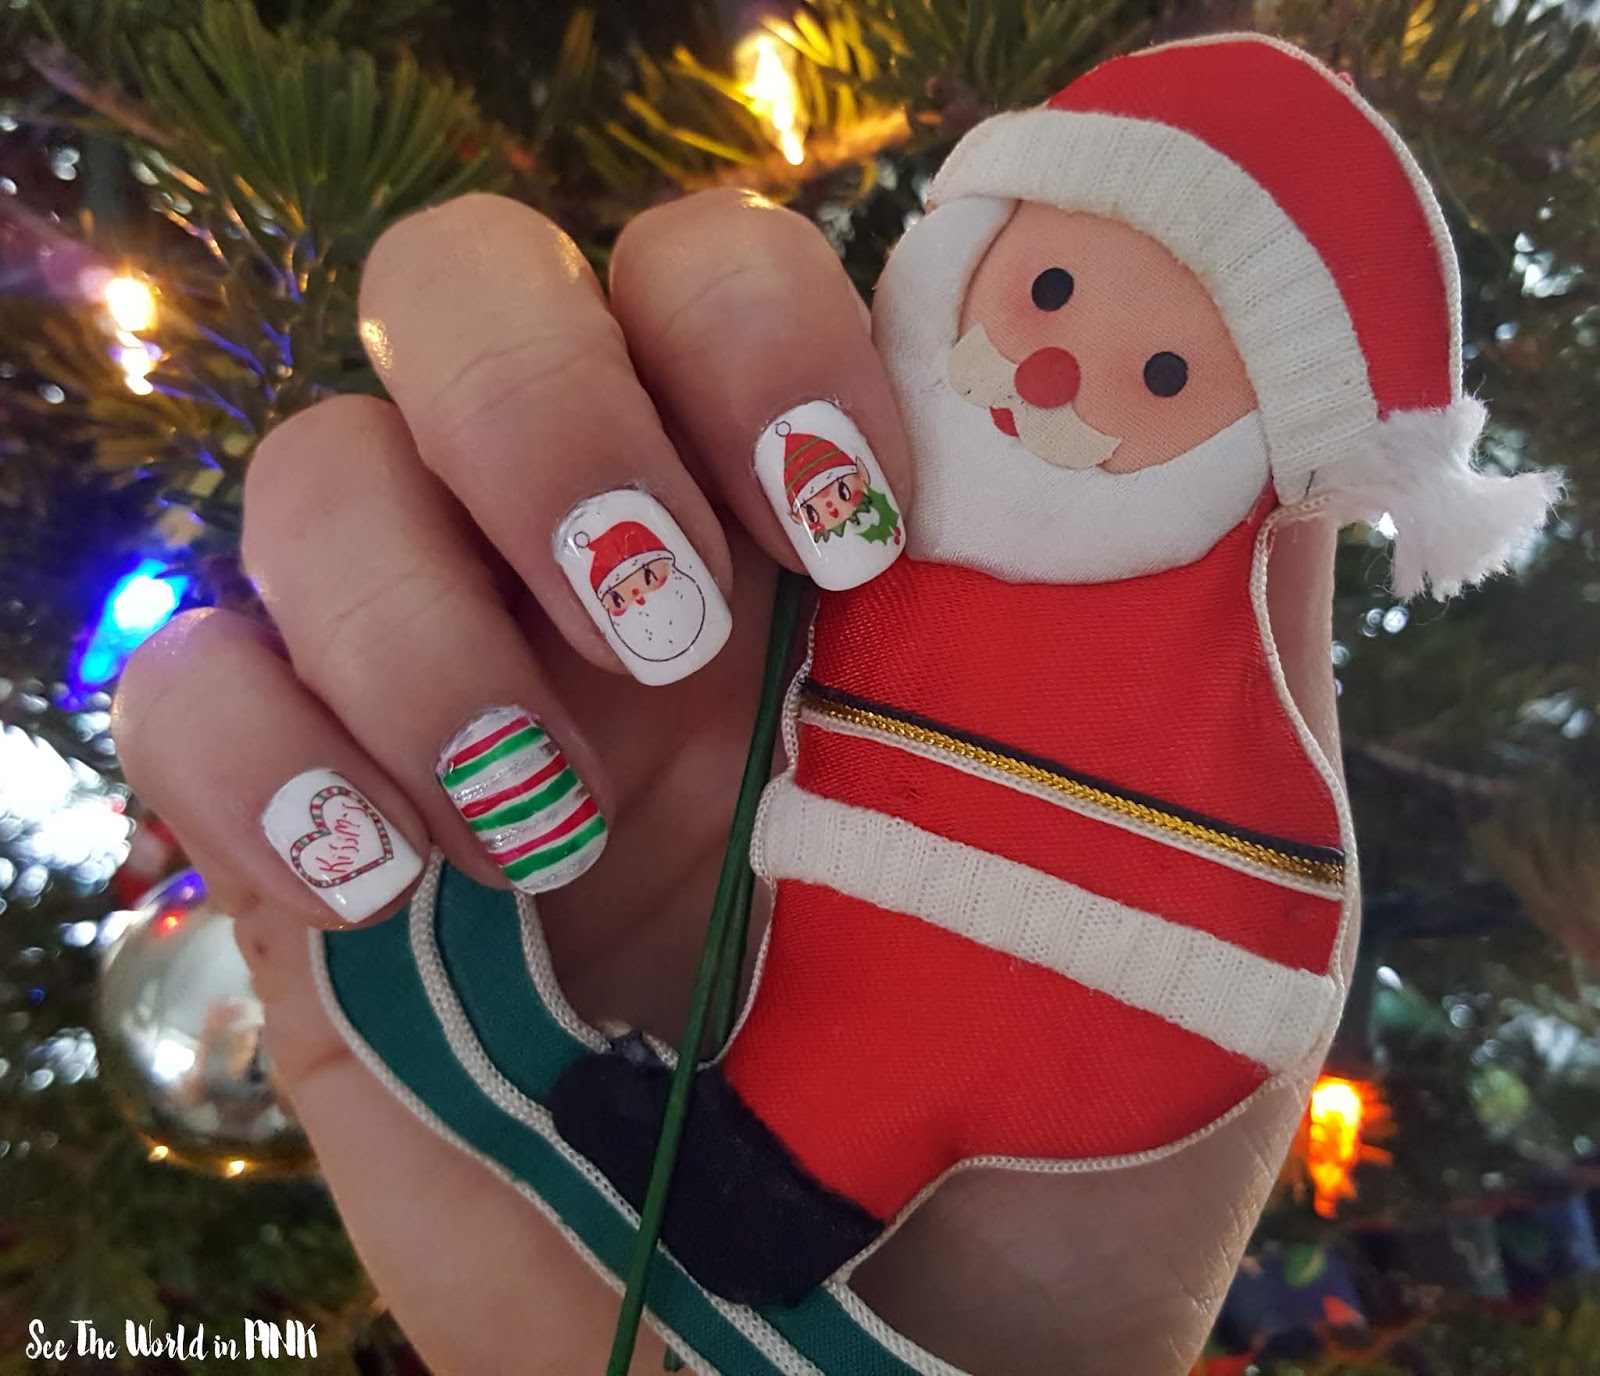 Manicure Monday - Merry Kitschmas Nails! 